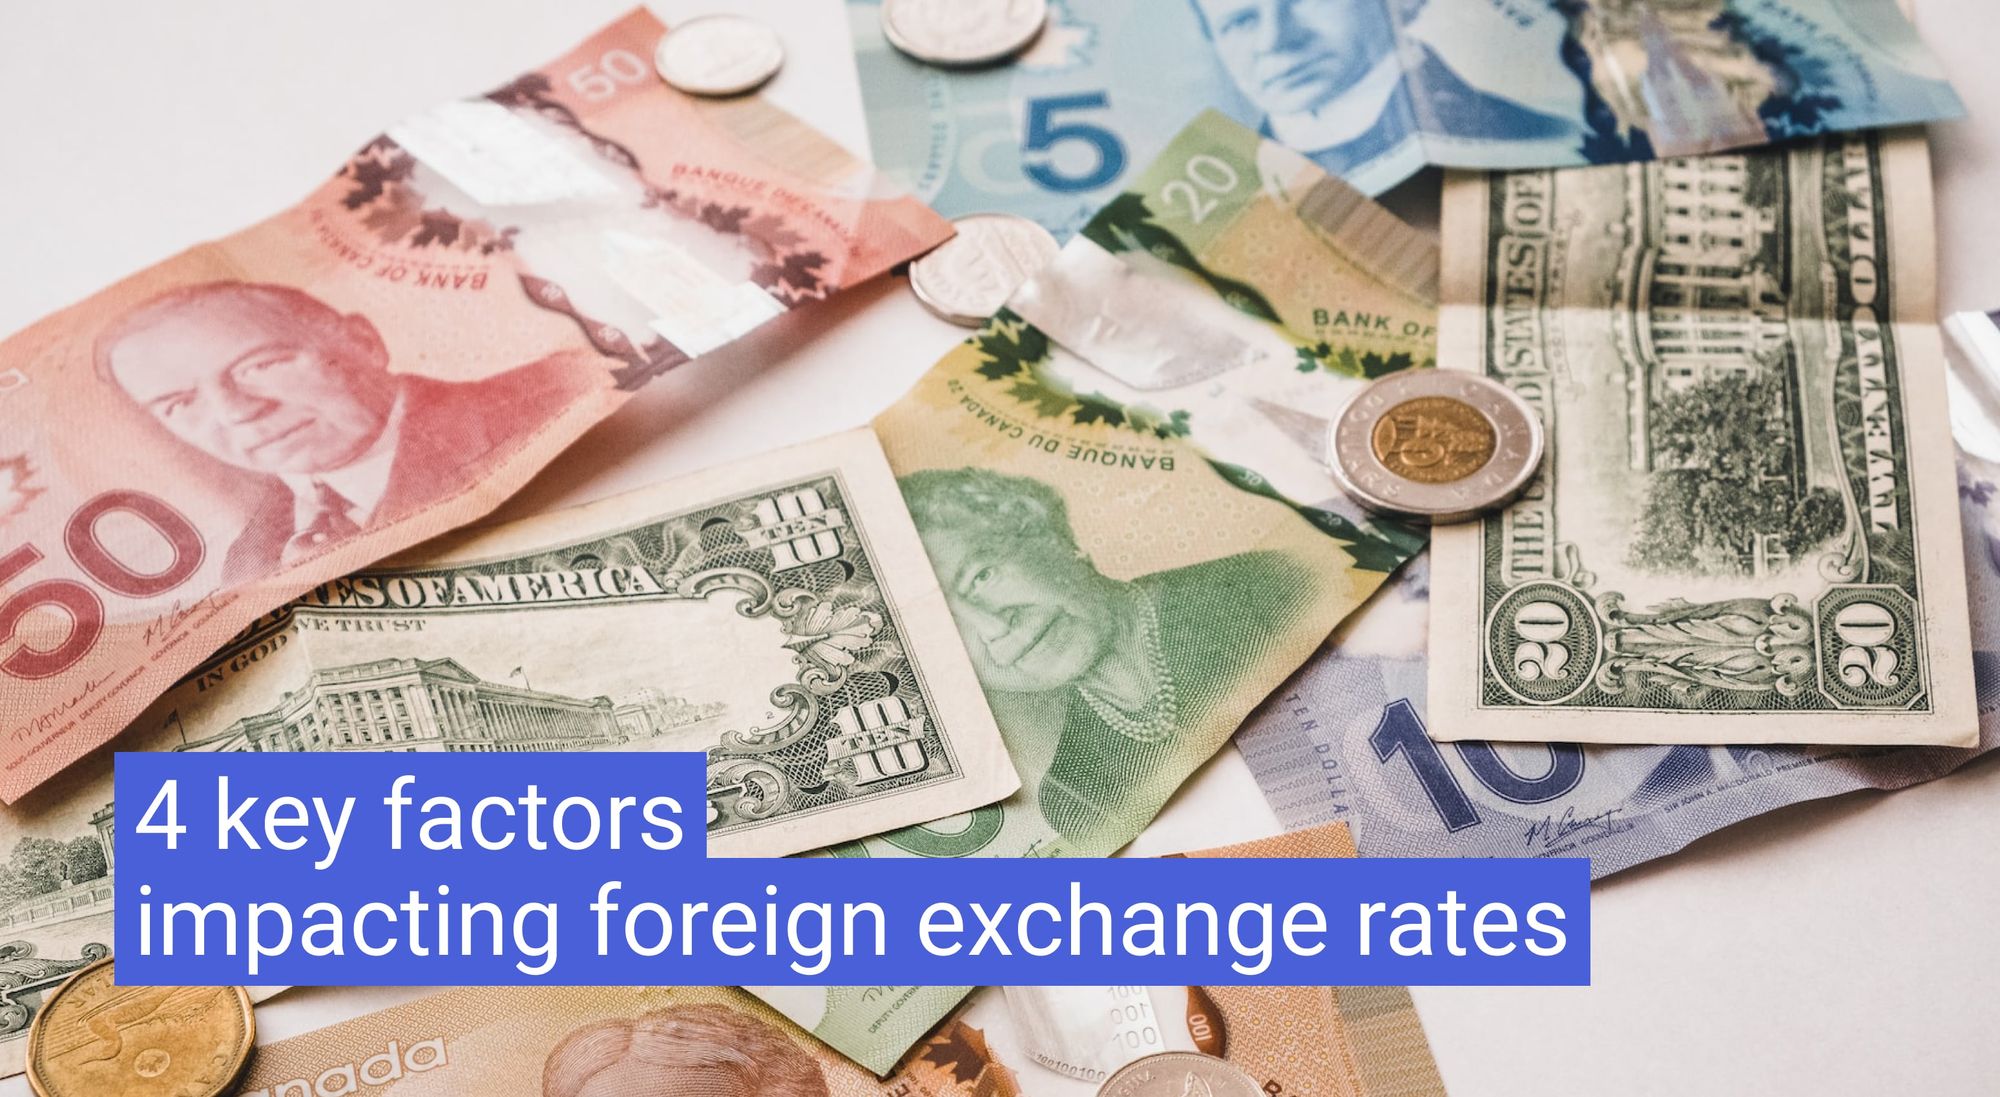 4 key factors impacting foreign exchange rates